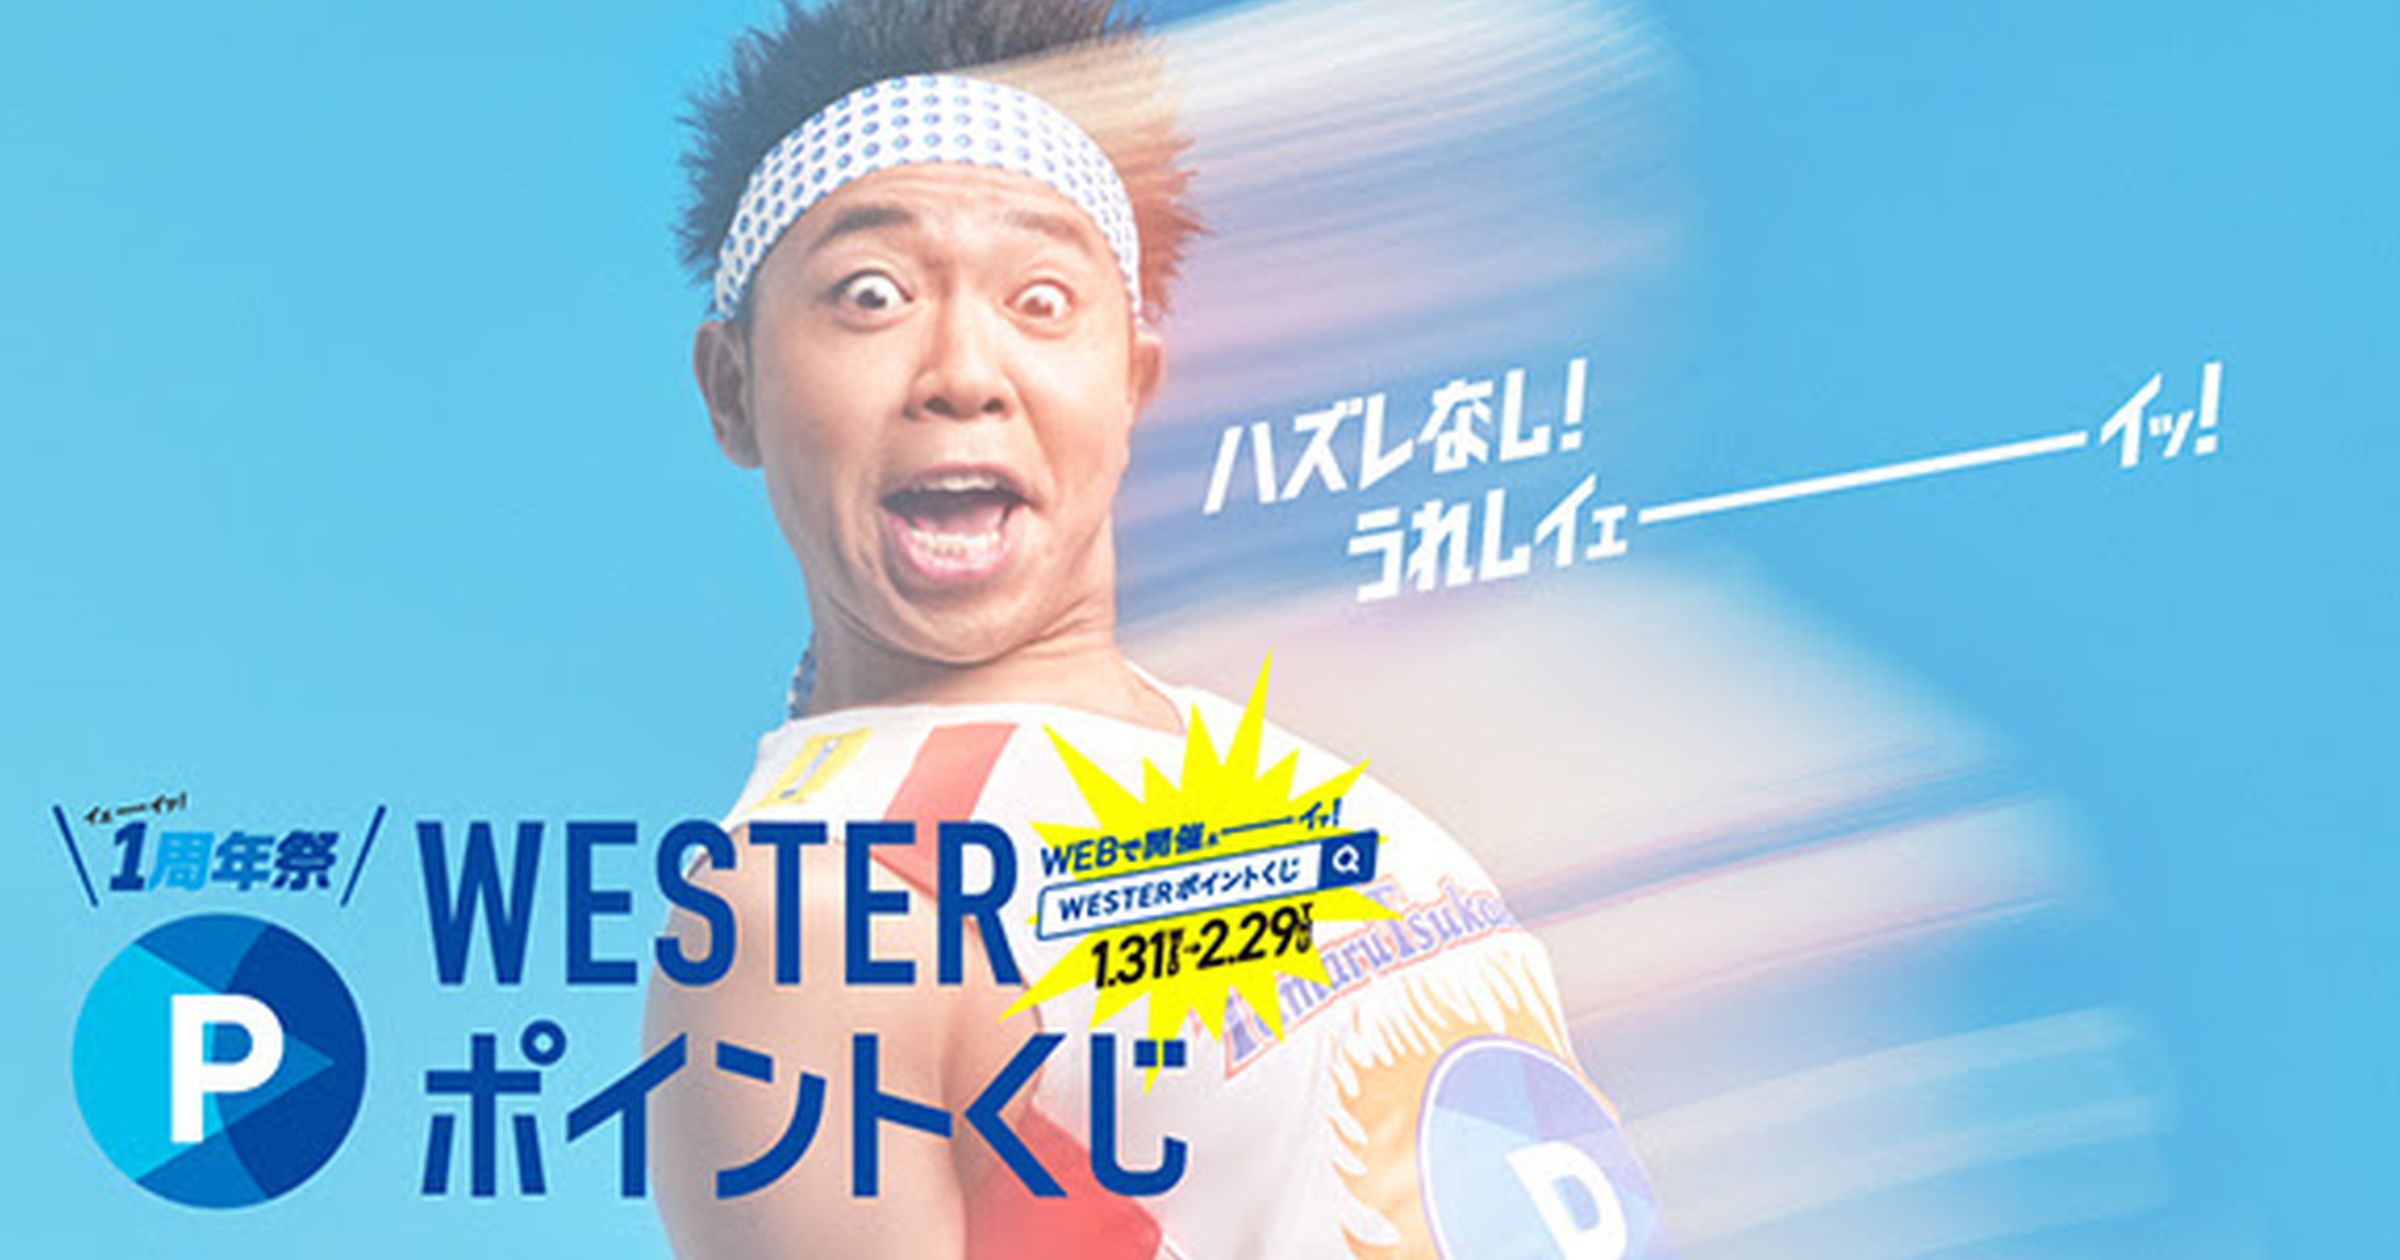 JR西日本、WESTERポイントで引けるハズレなしの「WESTERポイントくじ」を開催